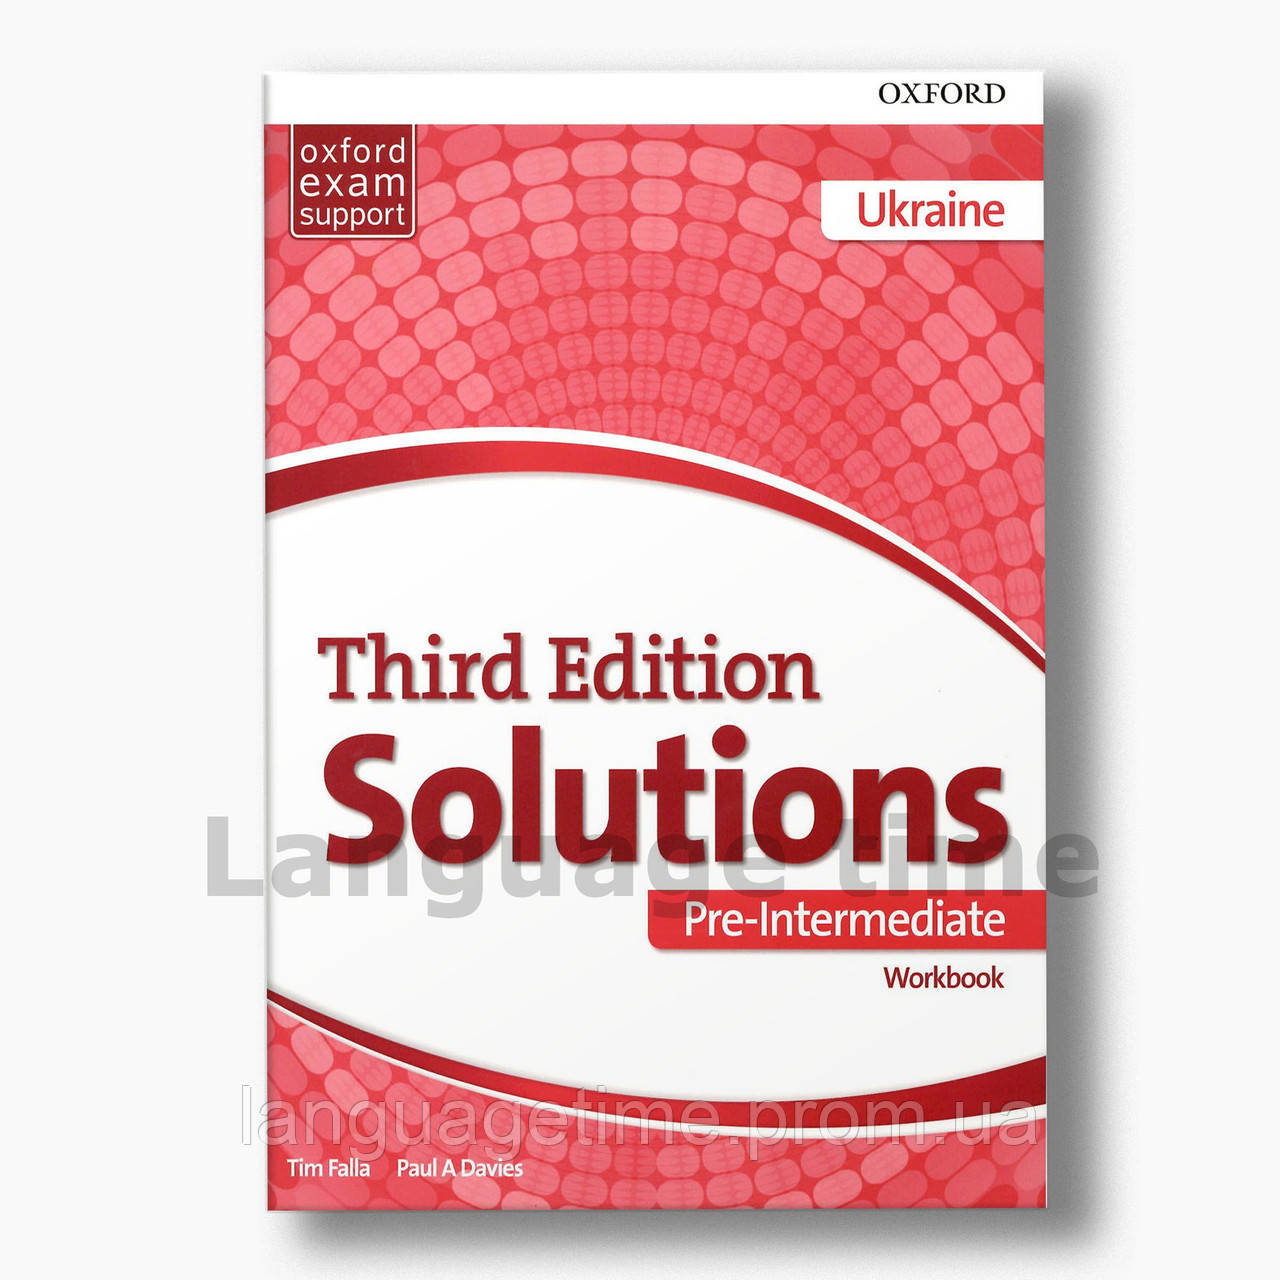 Solution pre intermediate 3rd edition workbook audio. Solutions pre Intermediate 3rd Edition Audio. Solutions pre-Intermediate 3rd Edition Workbook Audio.